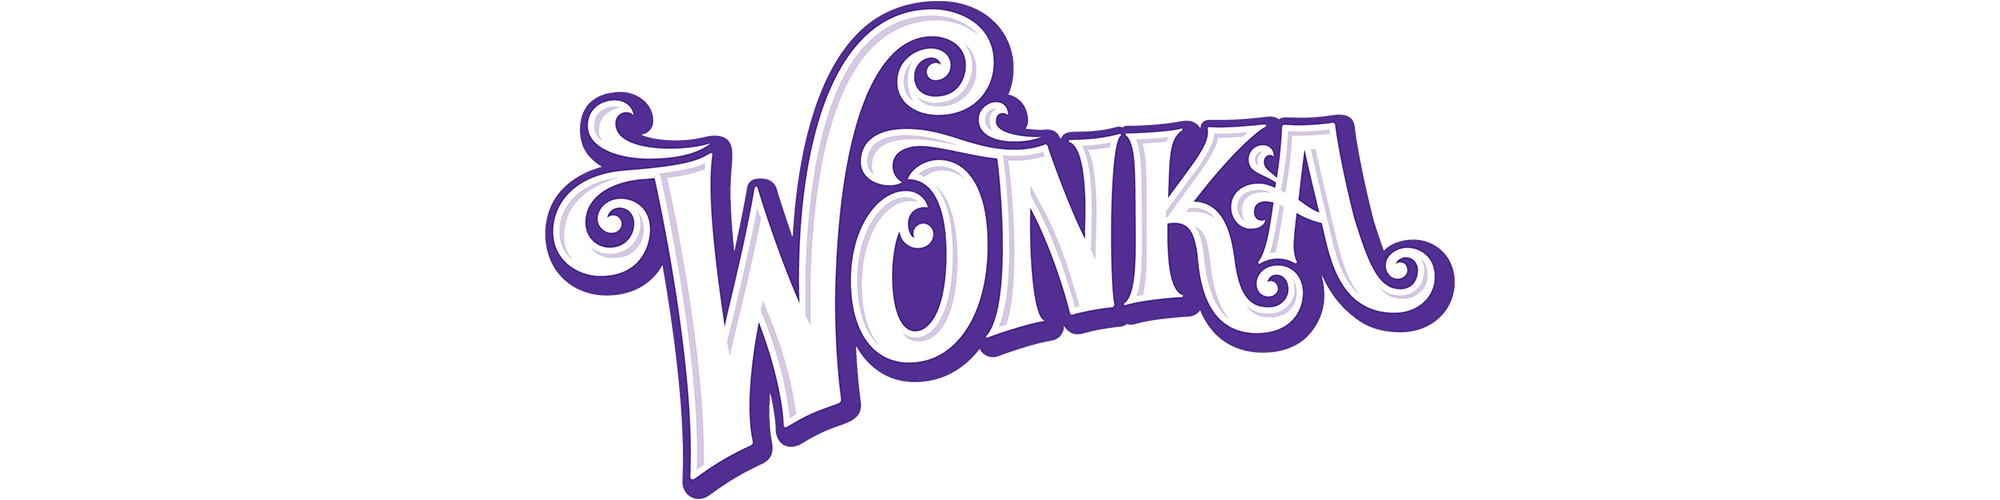 Wonka's logo uses purple color psychology